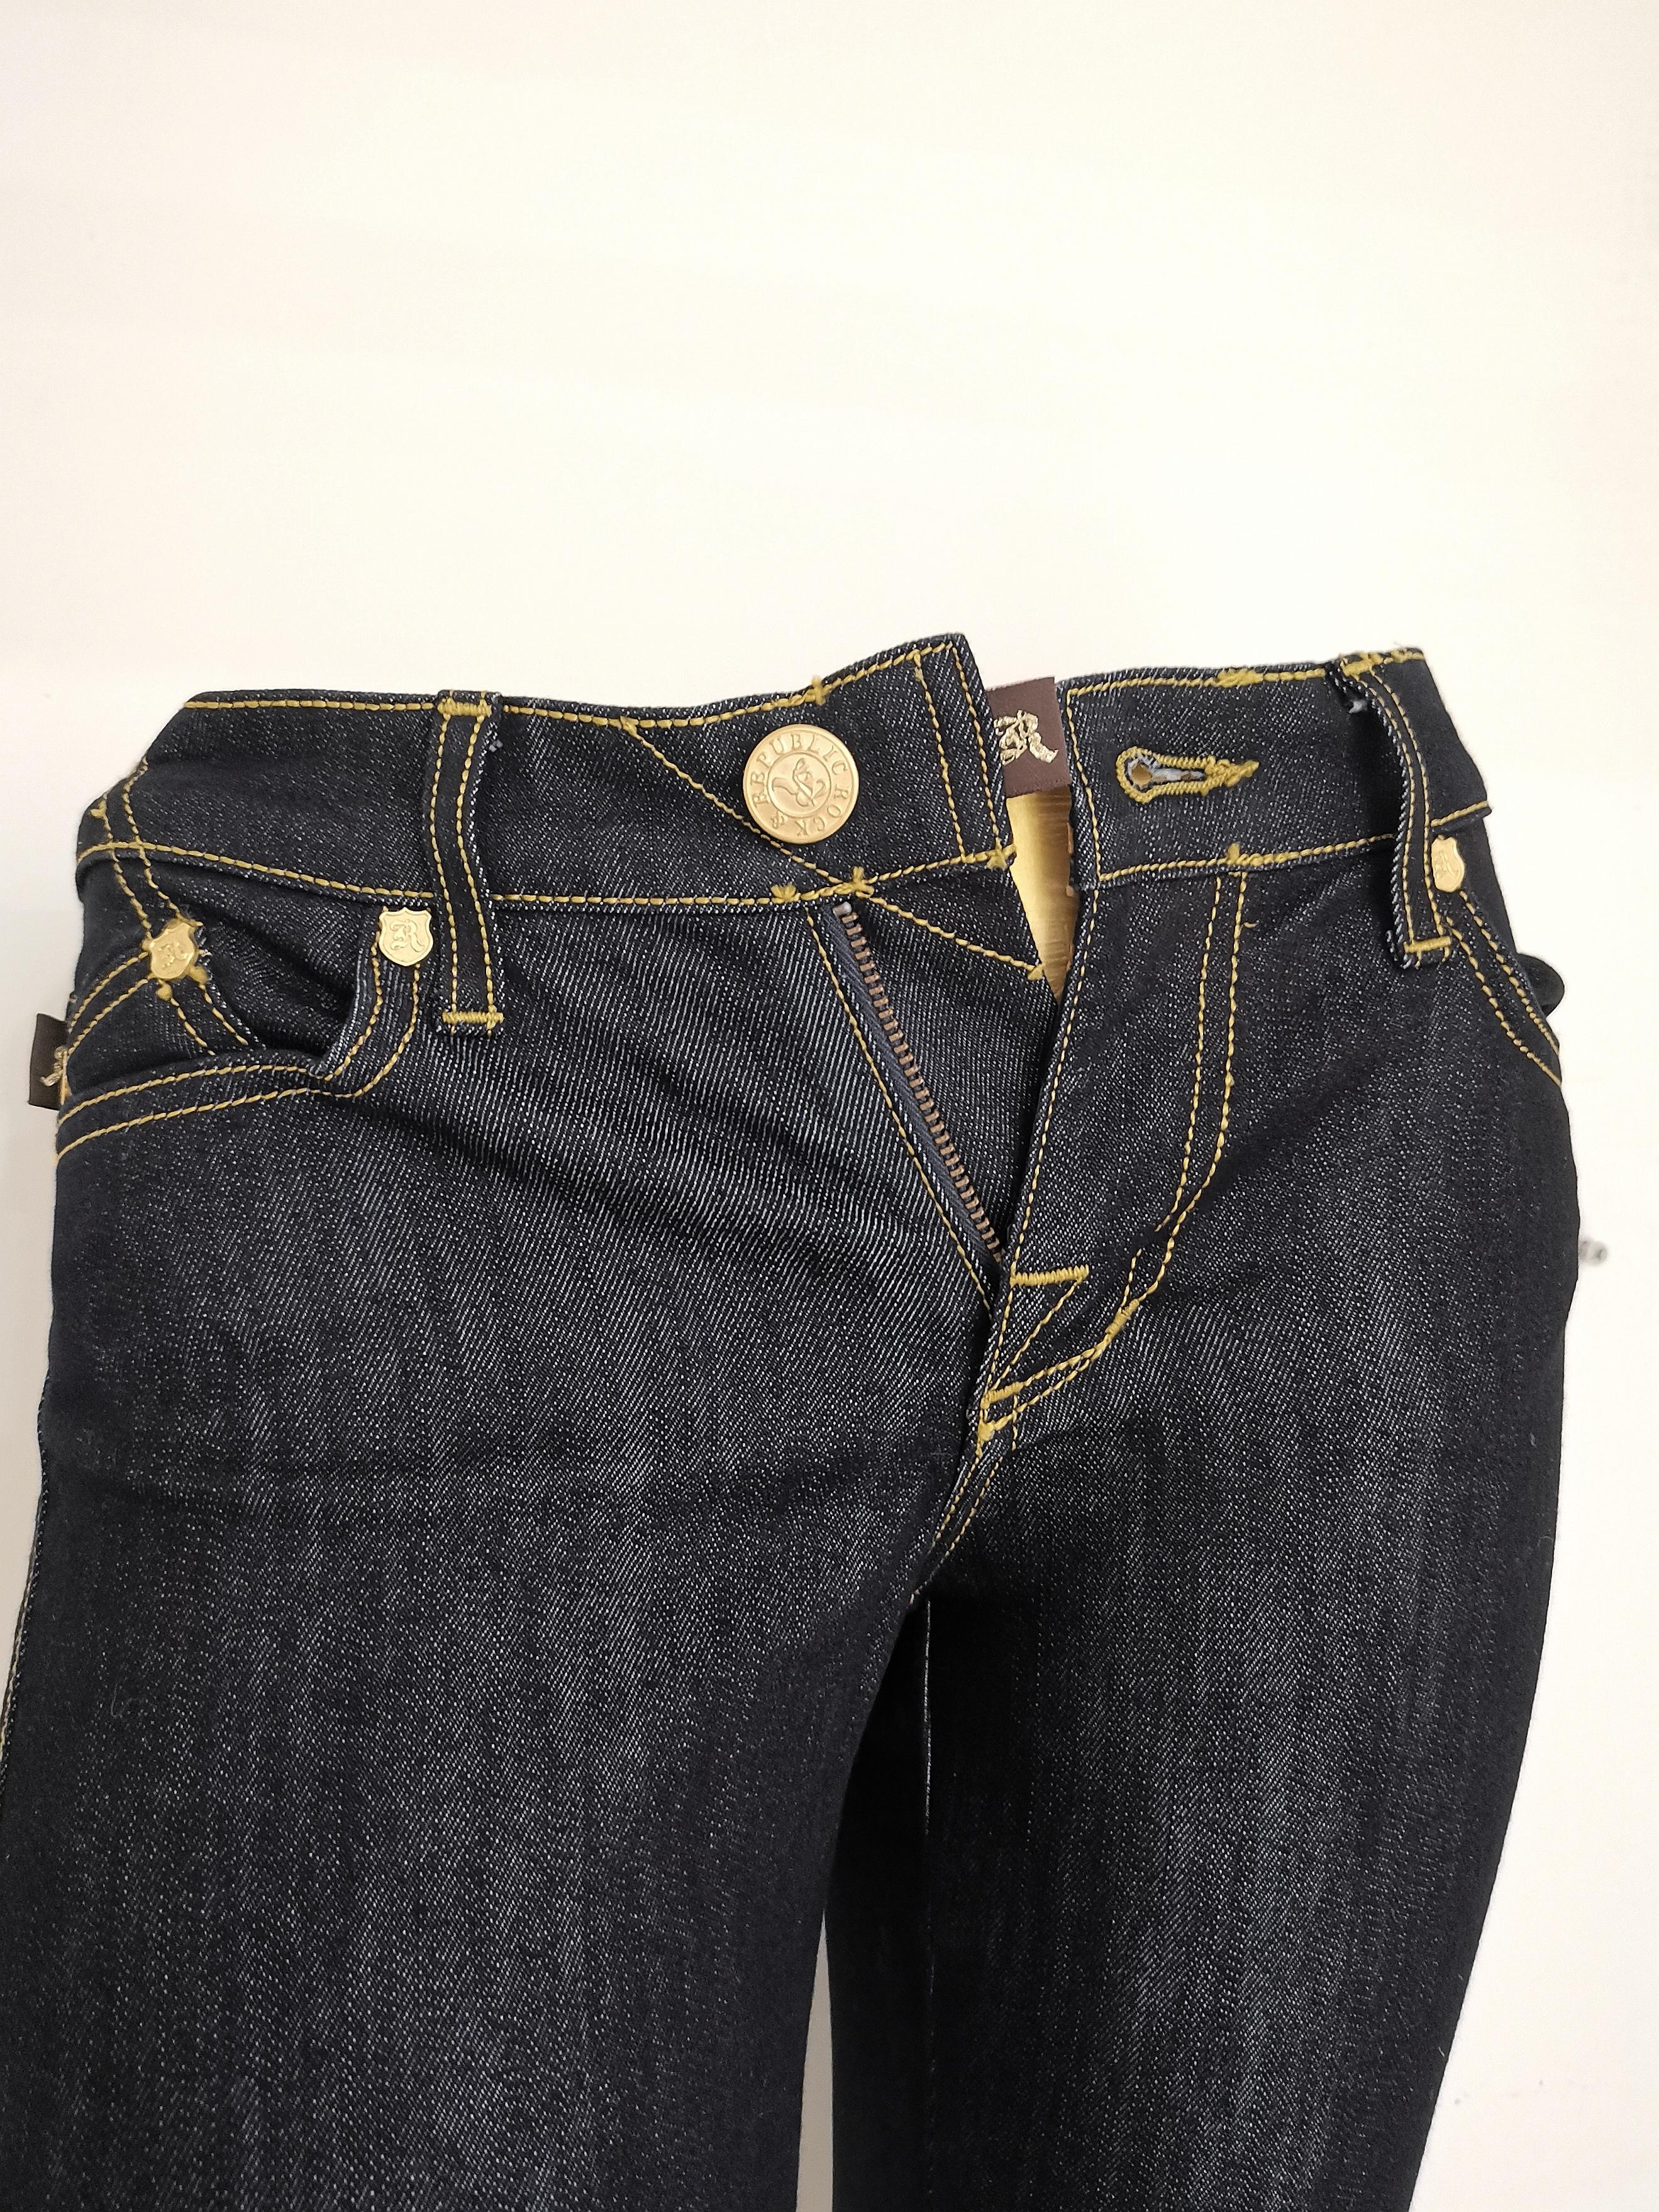 Black Rock and Republic skinny denim jeans For Sale